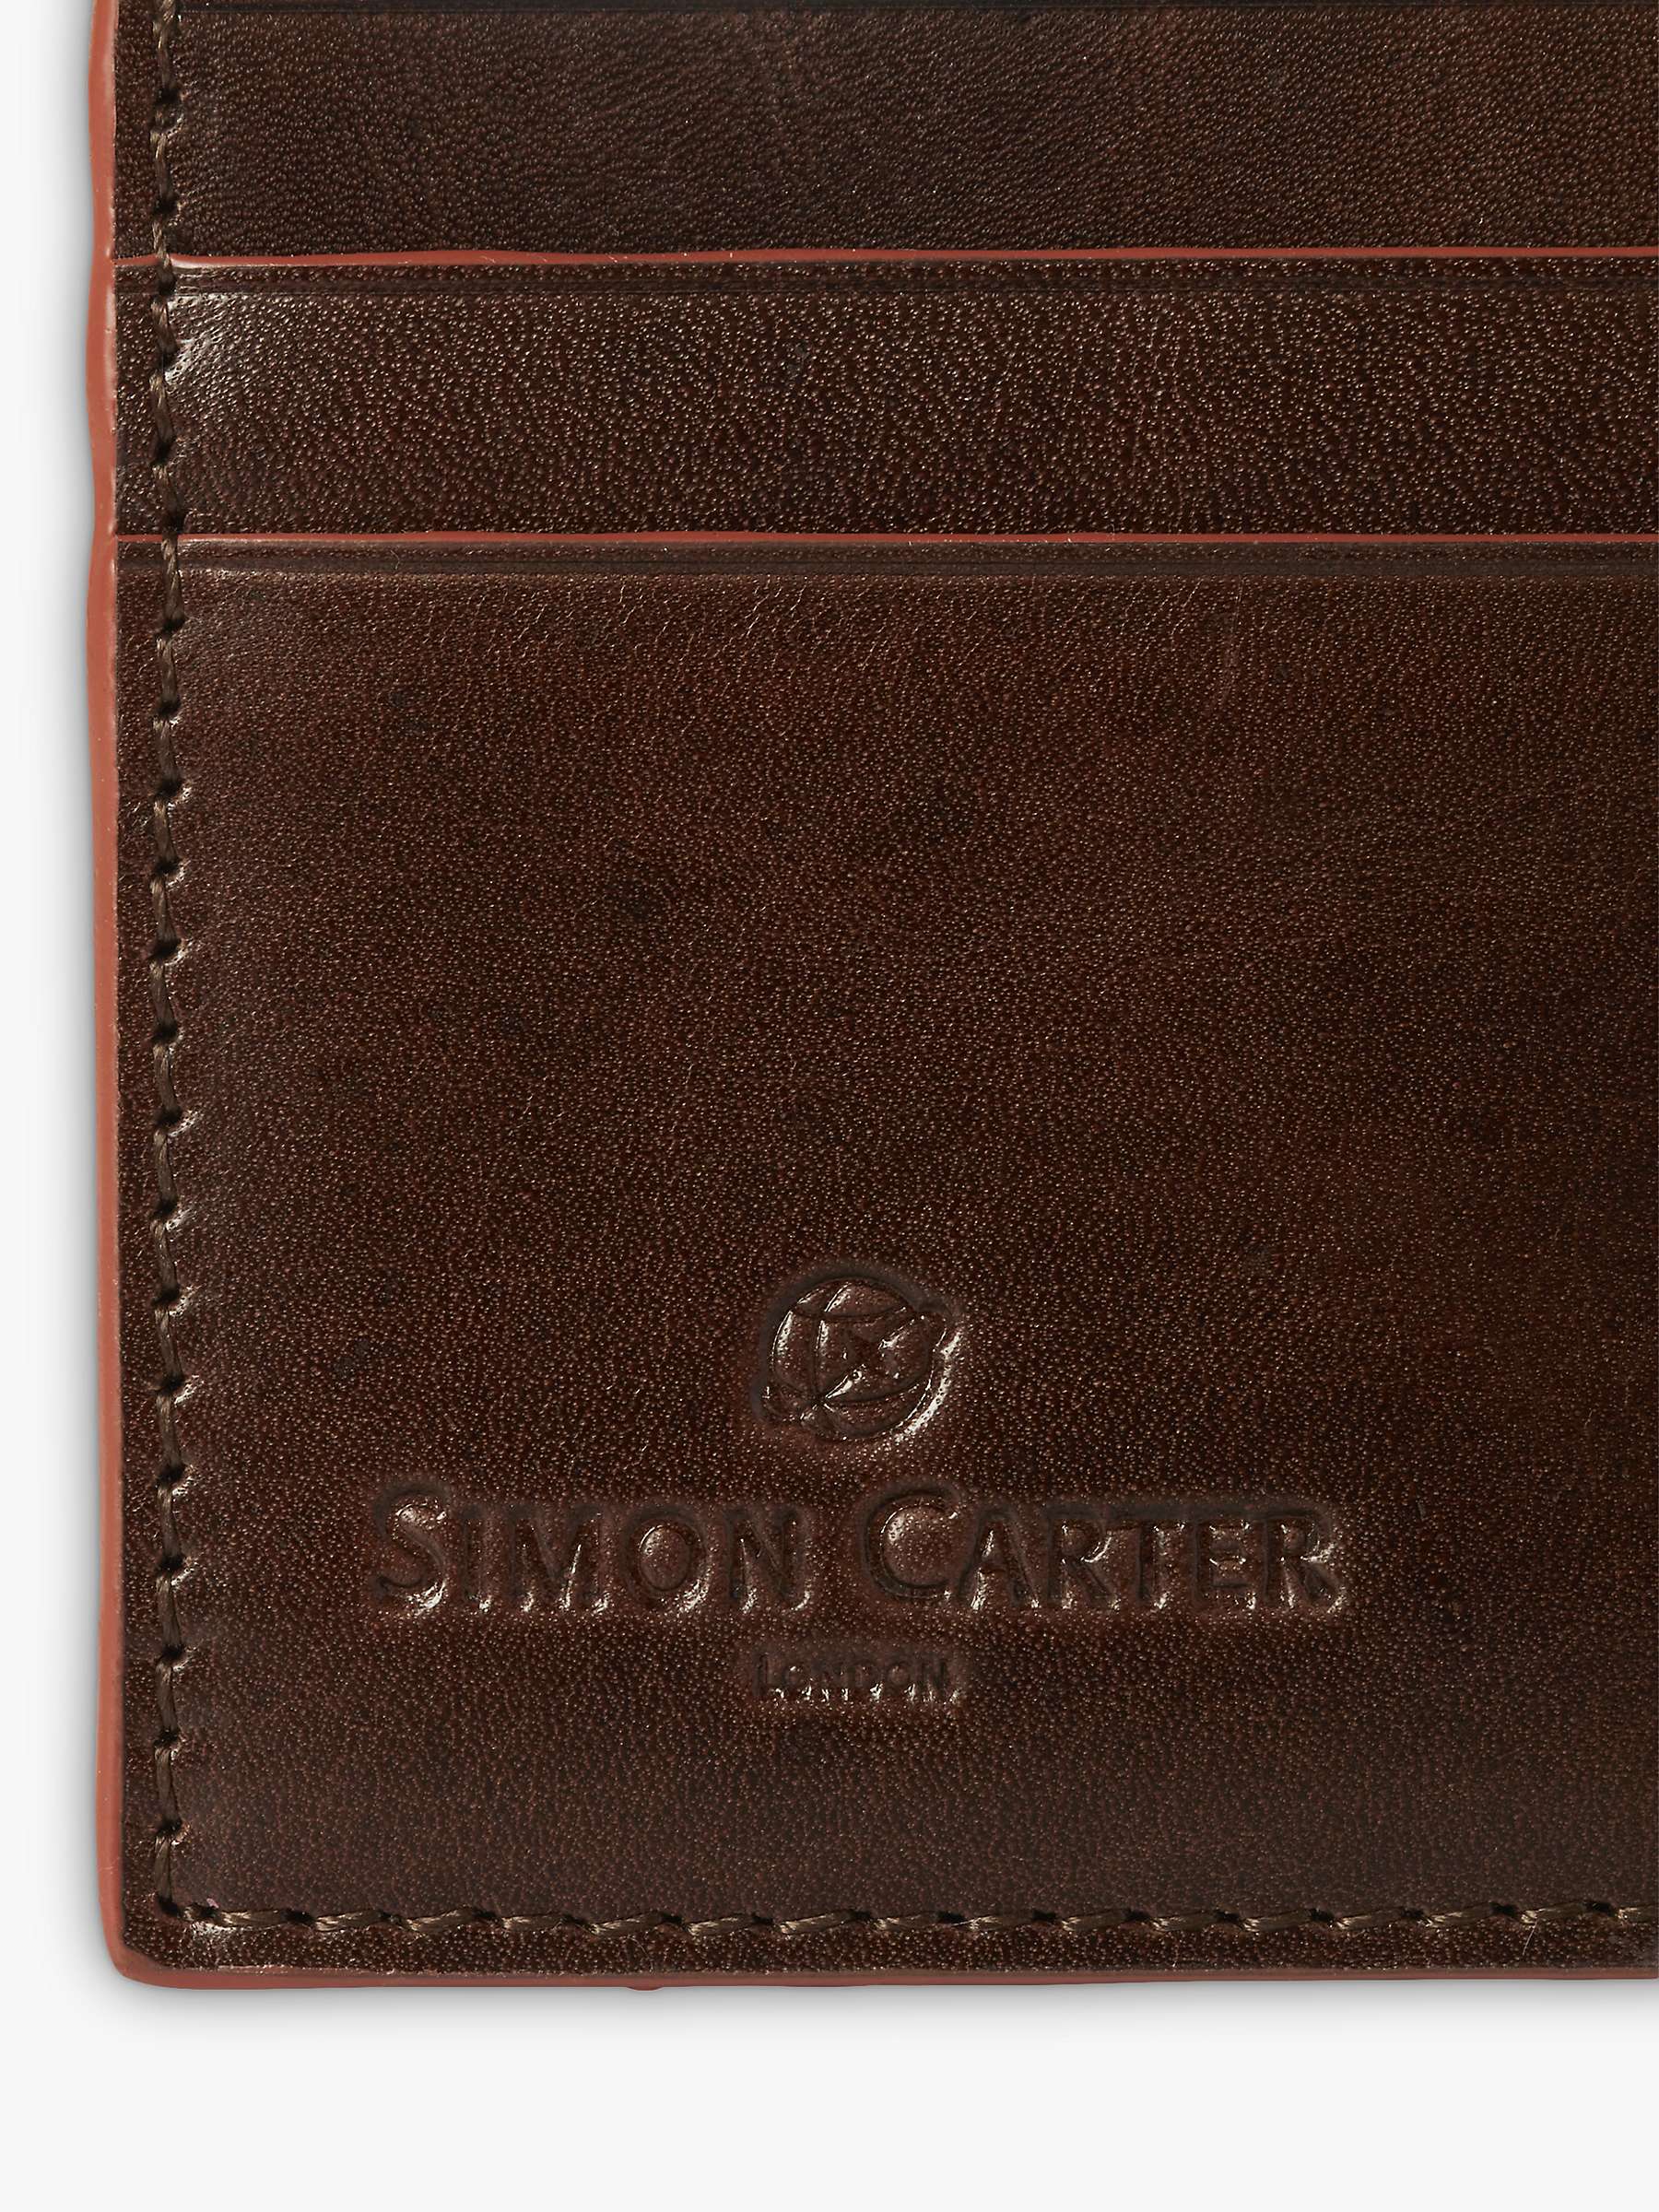 Buy Simon Carter Leather Edge Credit Card Holder Online at johnlewis.com